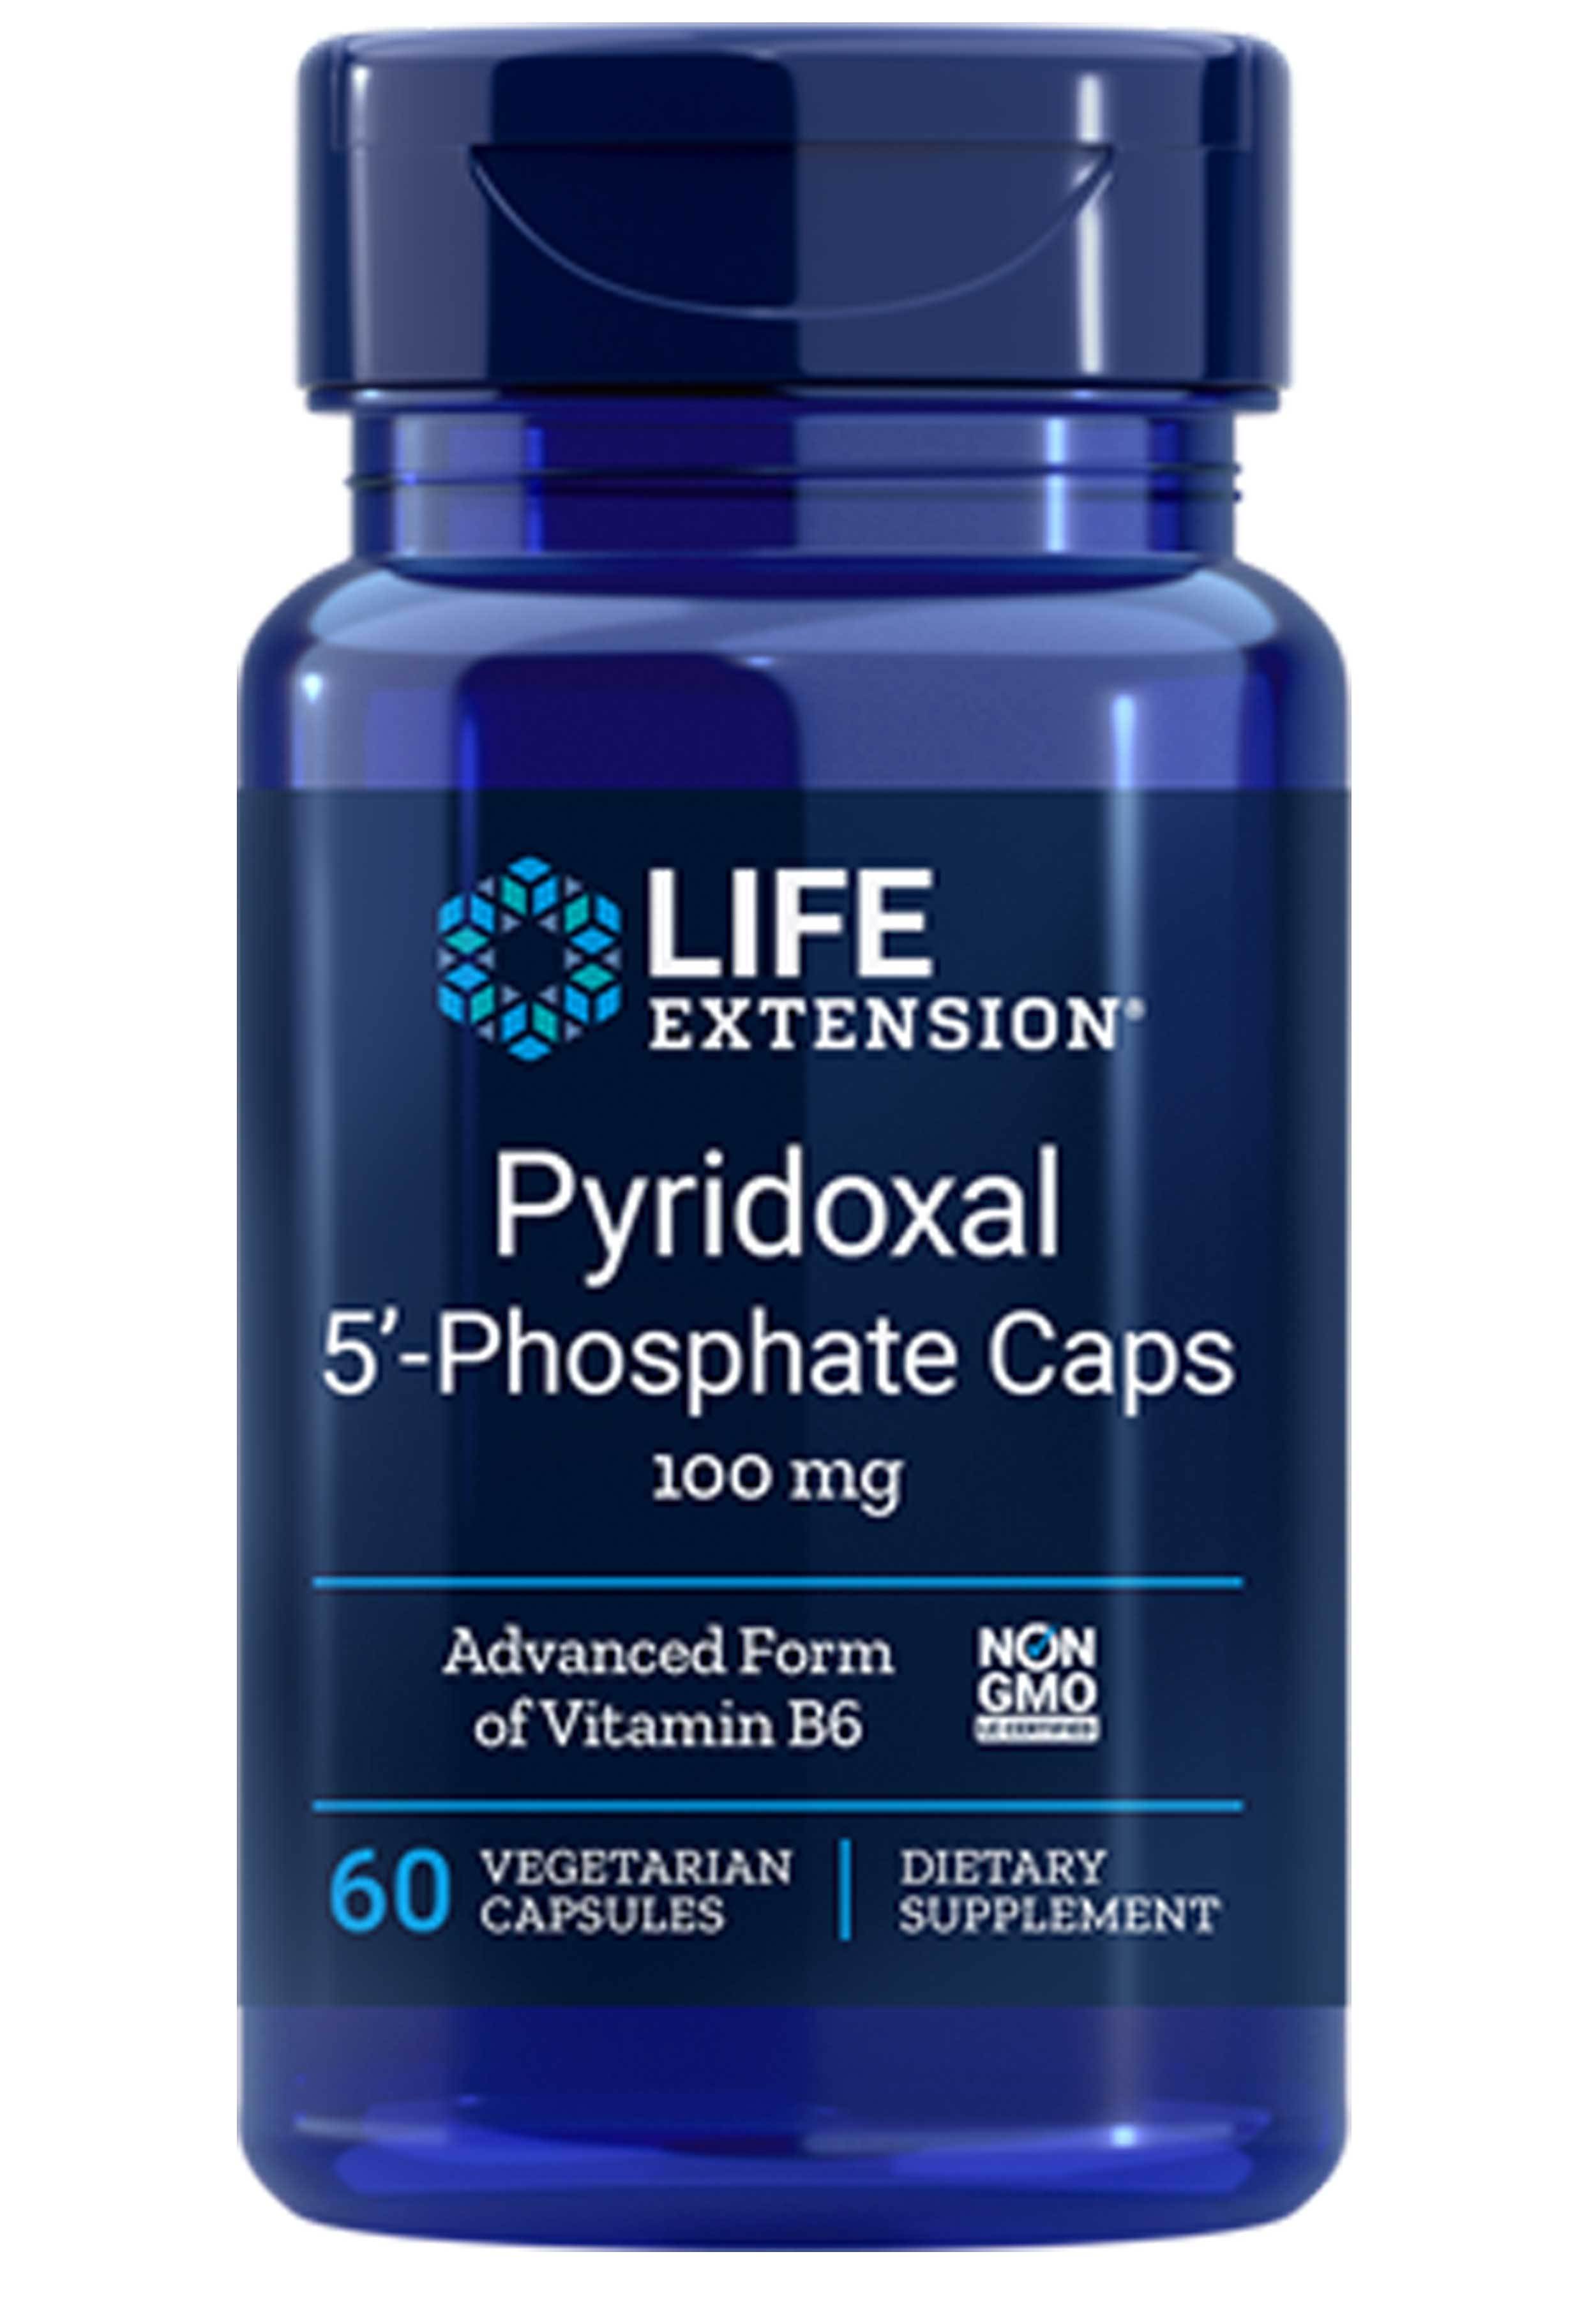 Life Extension Pyridoxal 5'-Phosphate Caps